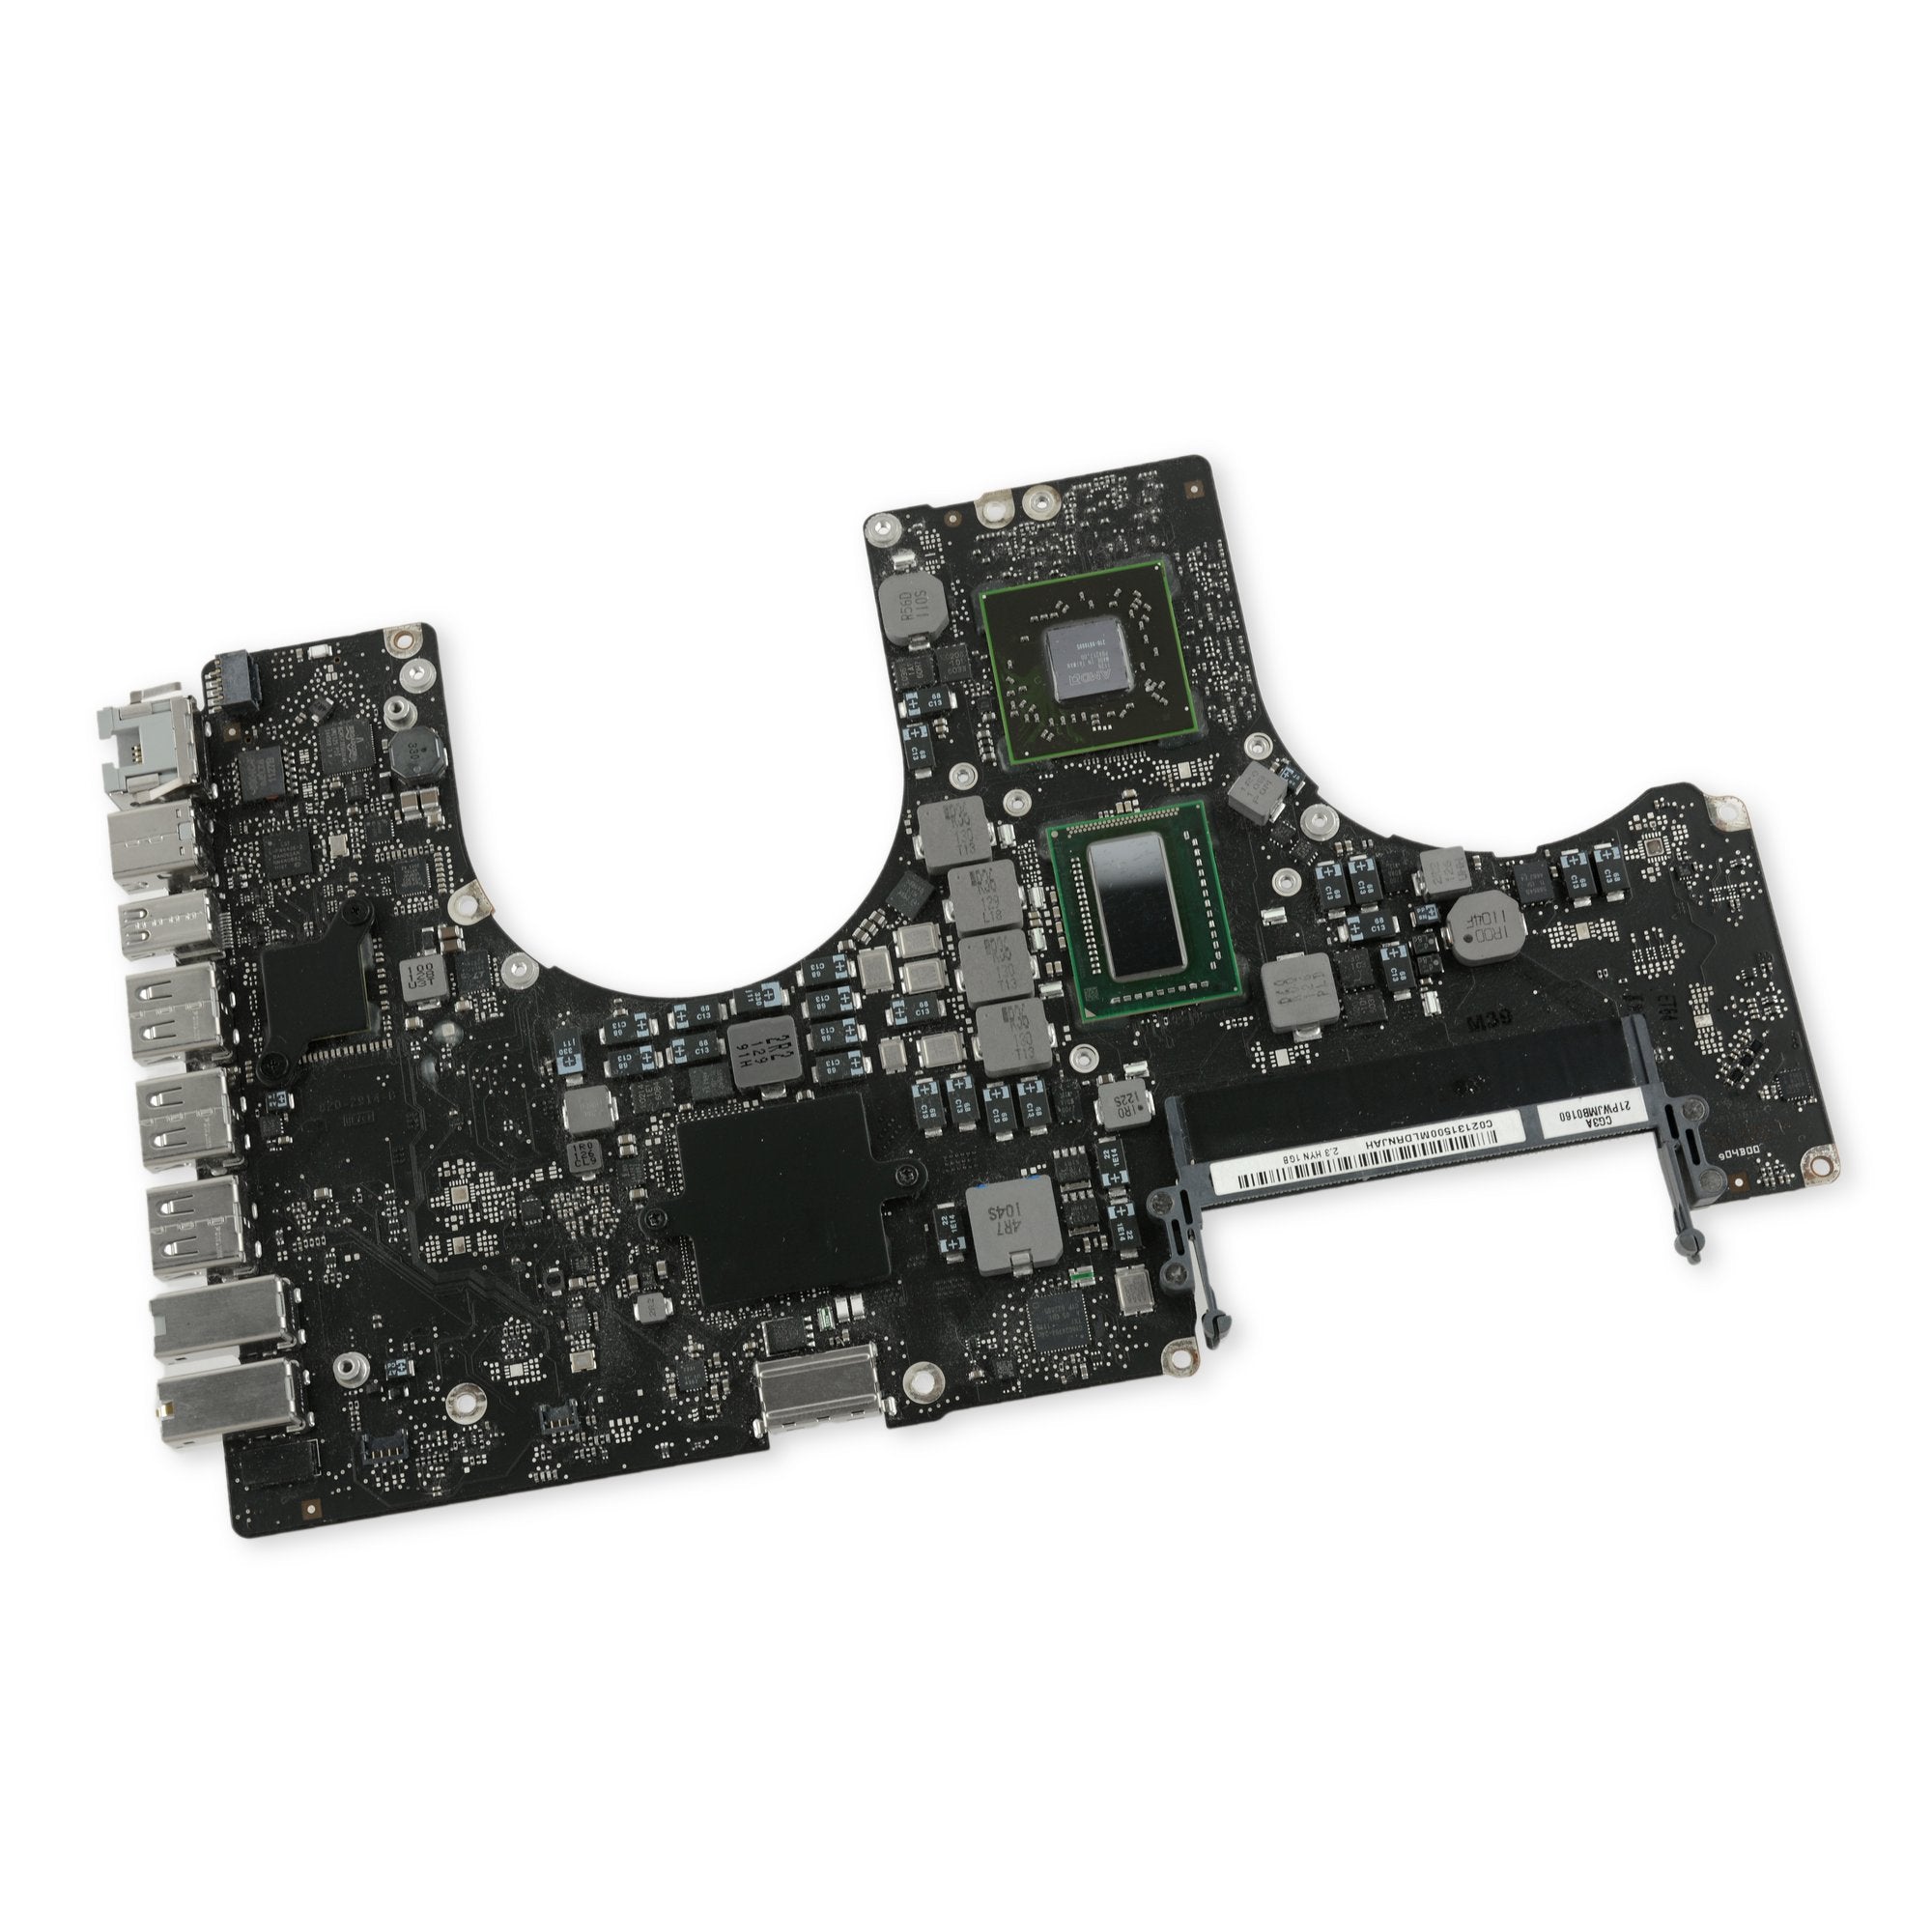 MacBook Pro 17" Unibody (Early 2011) 2.2 GHz Logic Board